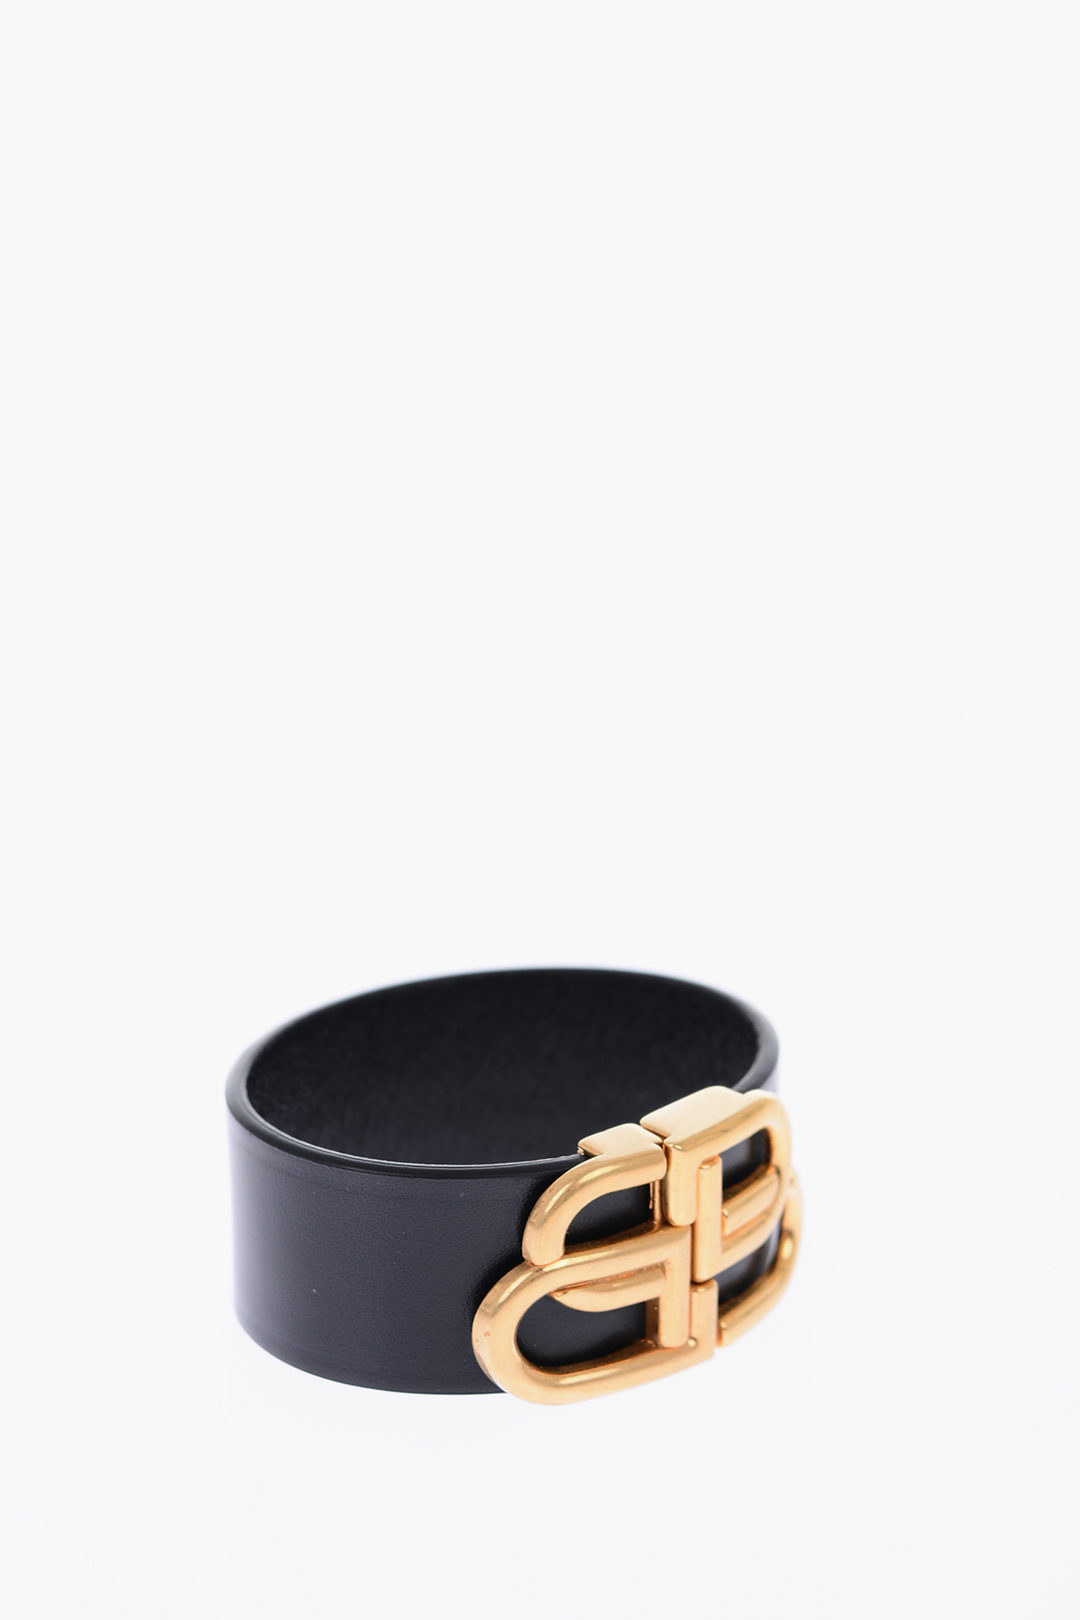 Buy Balenciaga bracelets on sale  Marie Claire Edit